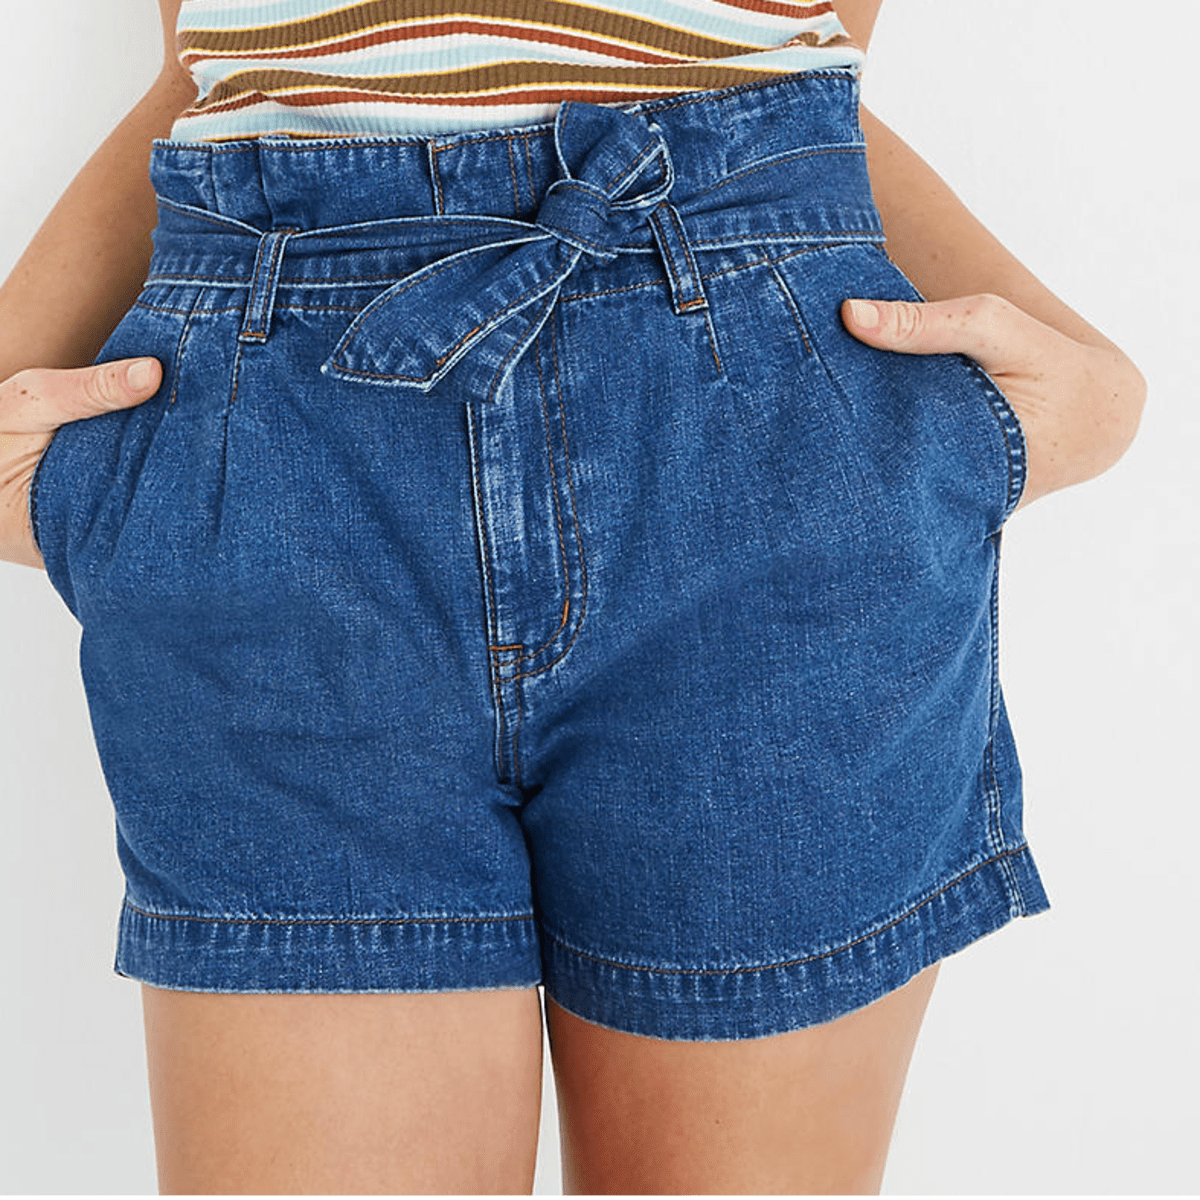 How to Wear Paperbag-Waist Pants - Fashionista